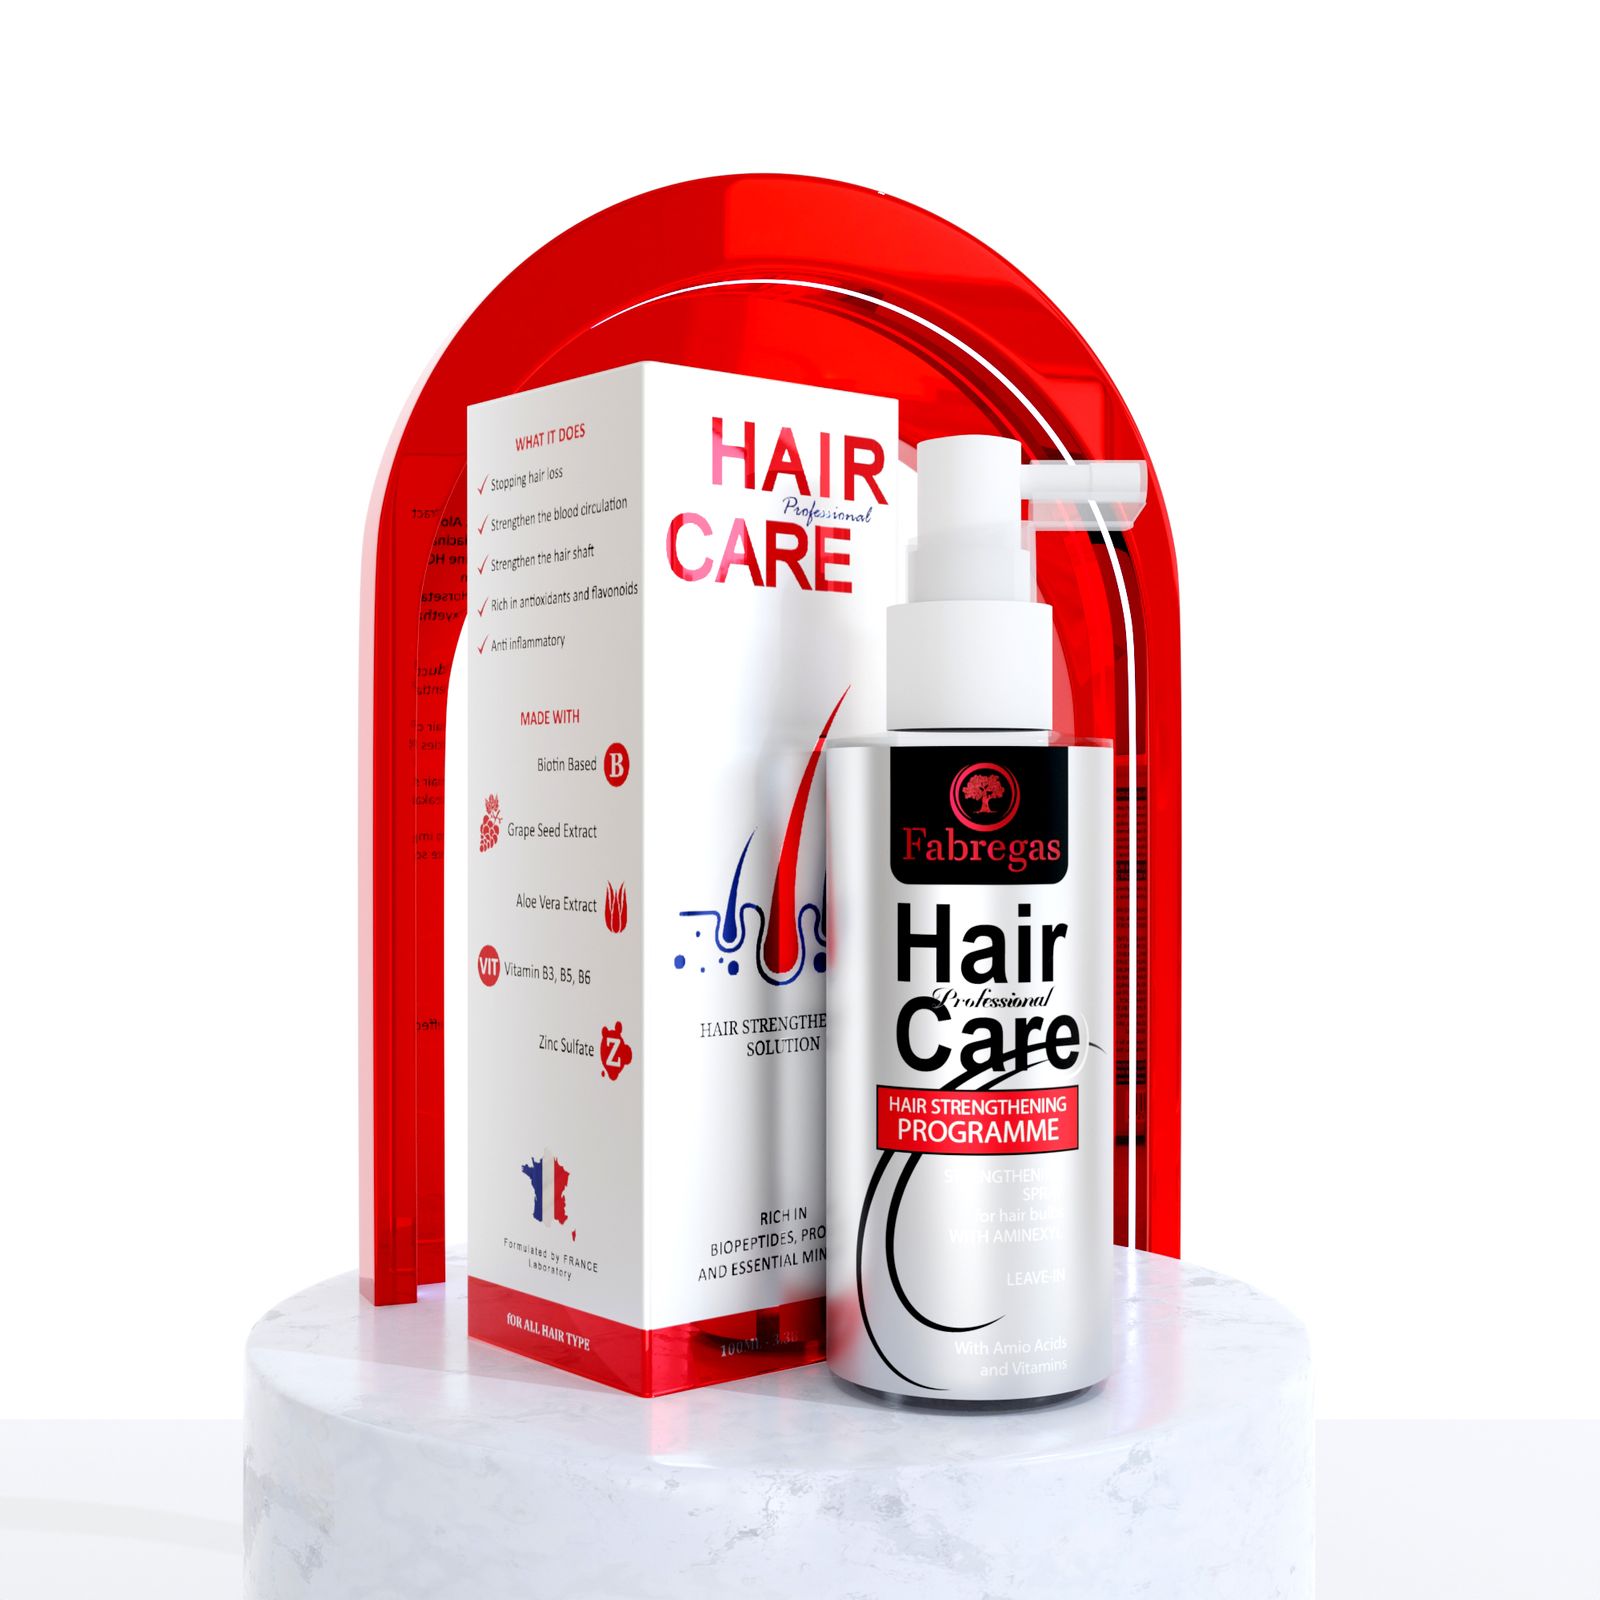 تونیک ضد ریزش و تقویت کننده مو فابریگاس مدل Hair Care حجم 100 میلی لیتر -  - 2